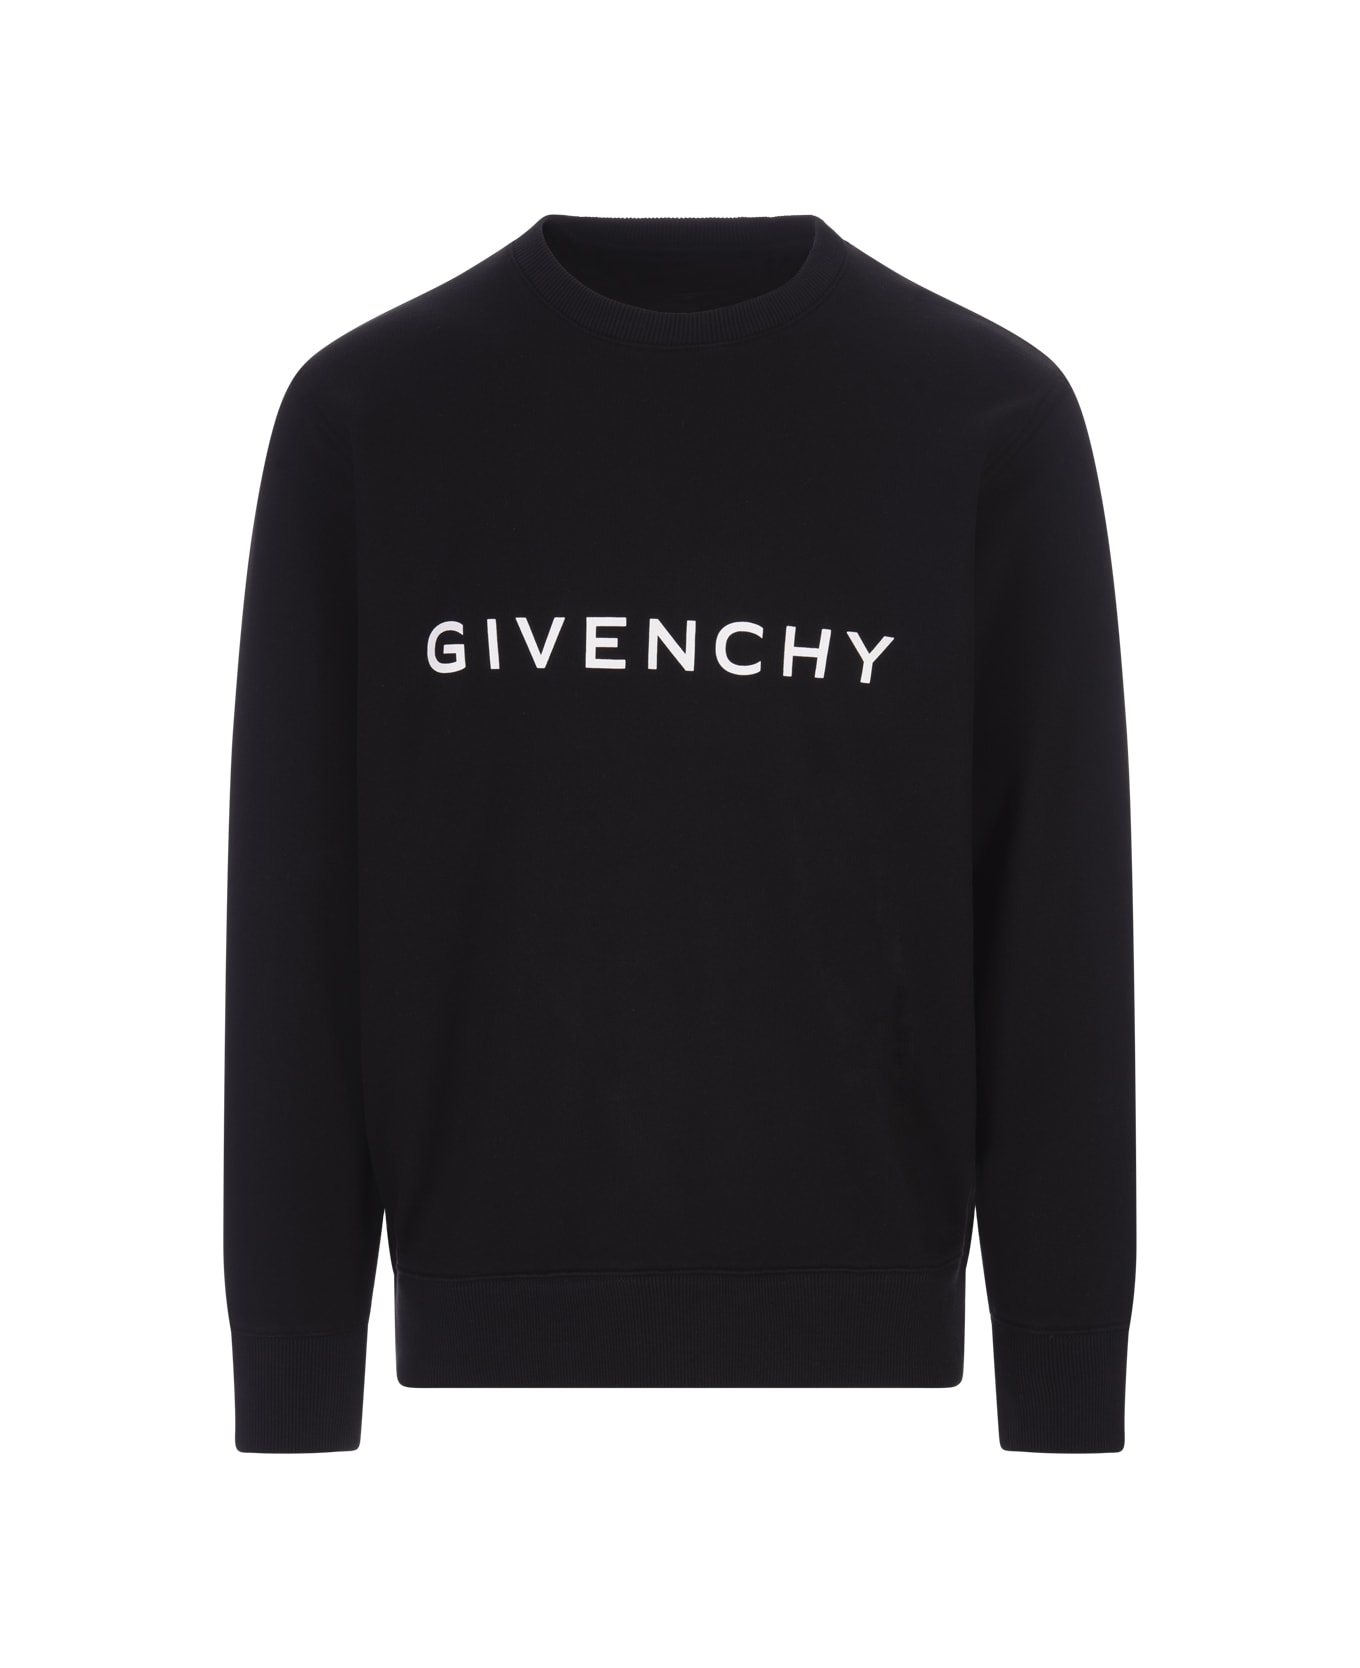 Givenchy Archetype Slim Sweatshirt In Black Gauzed Fabric - Black